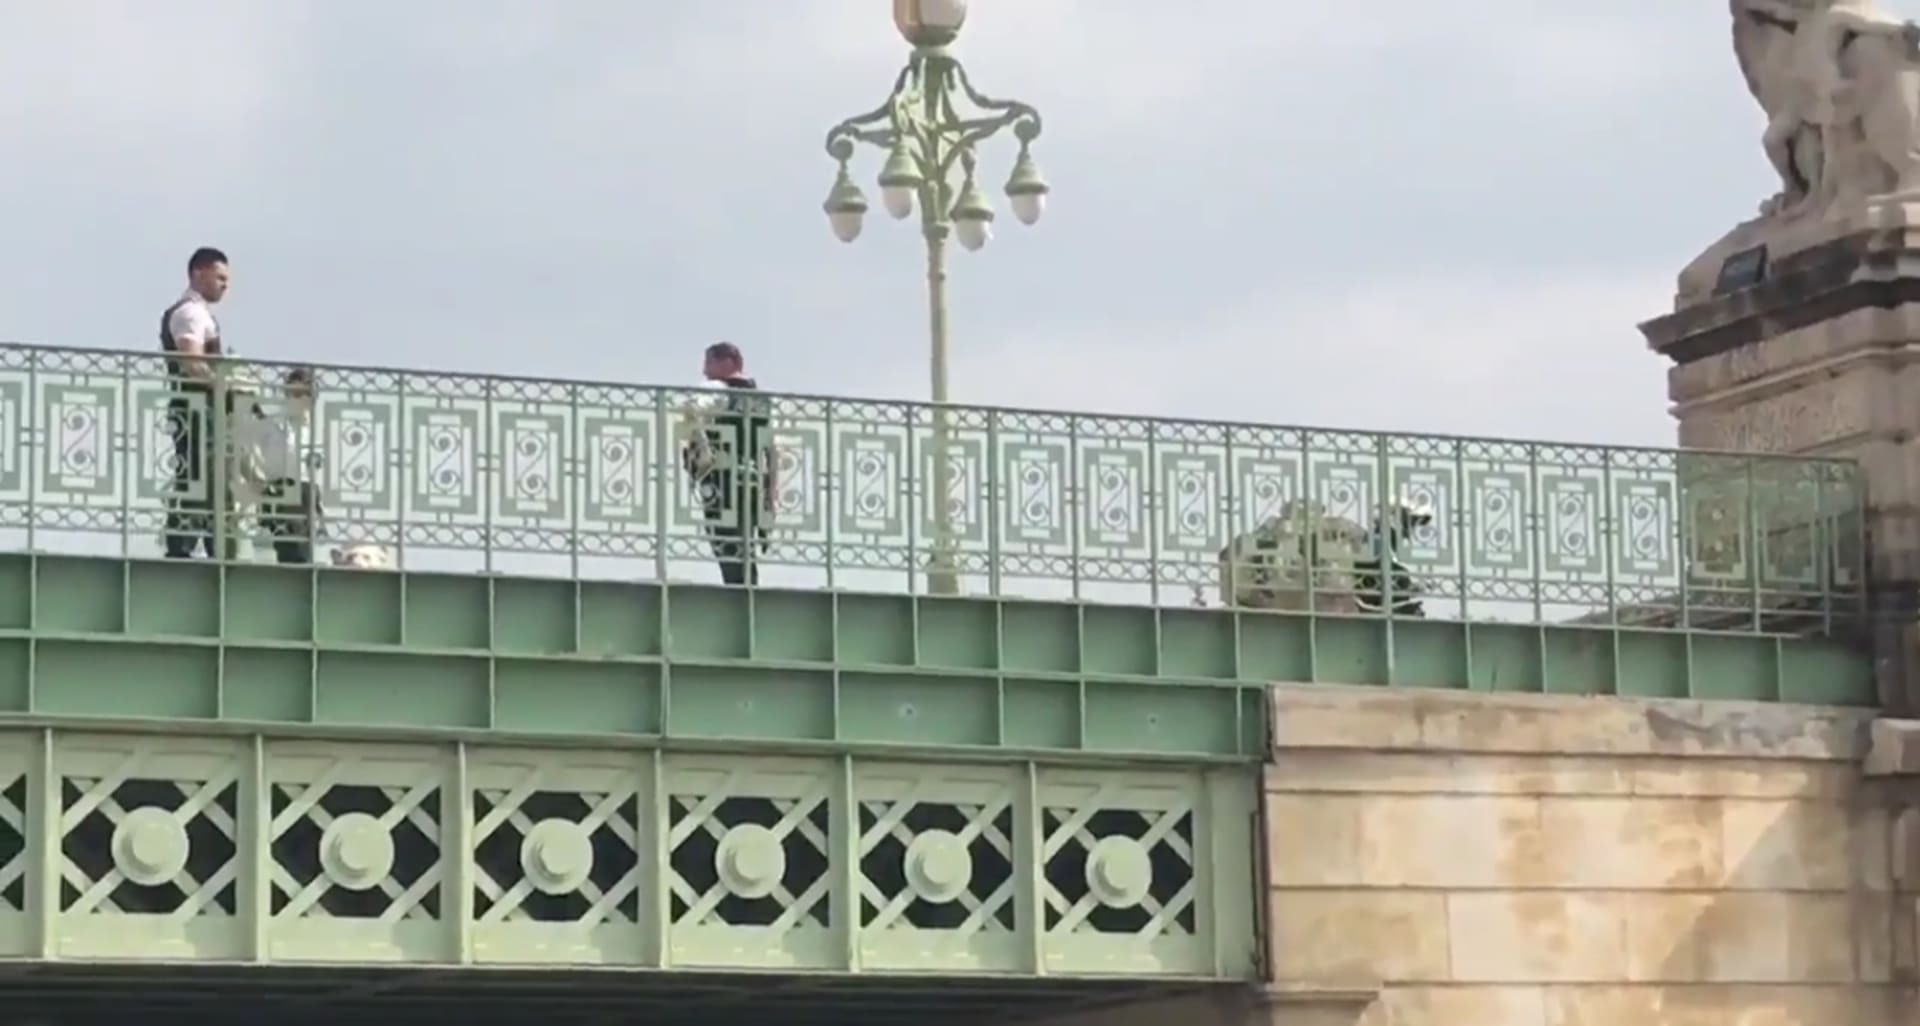 Útočník v Marseille bodal do lidí na nádraží